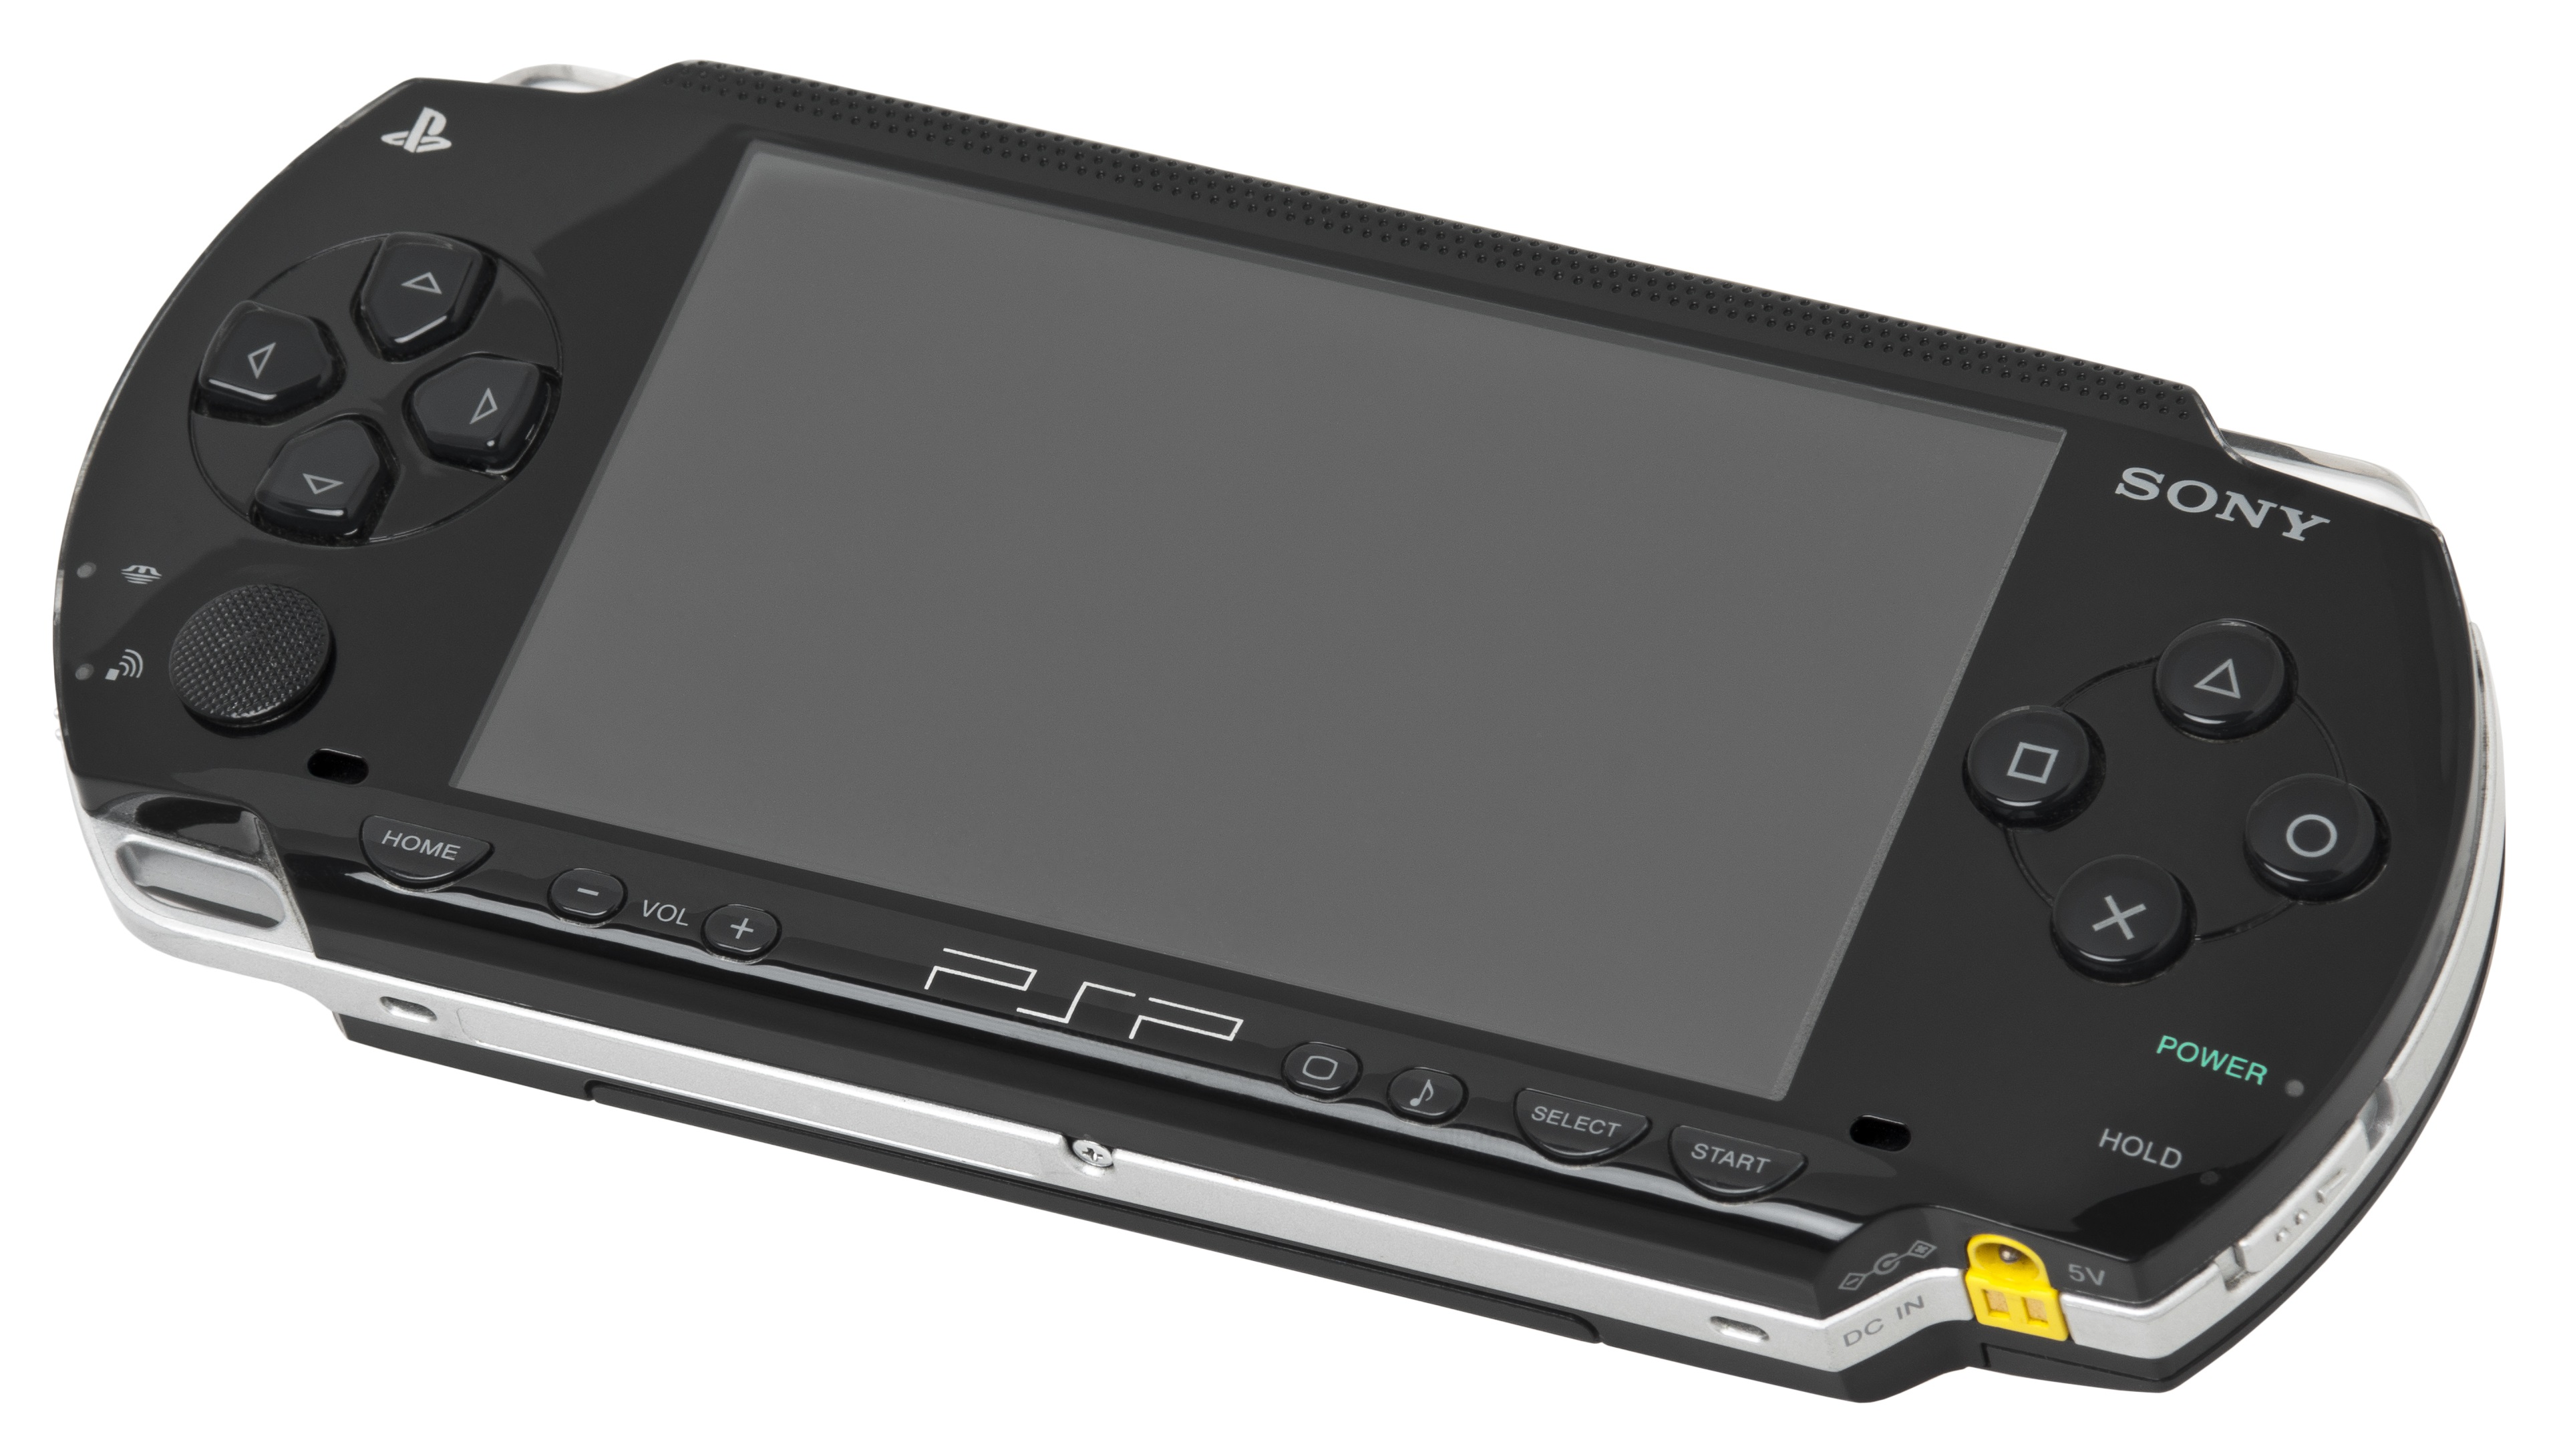 SONY PlayStation Portable